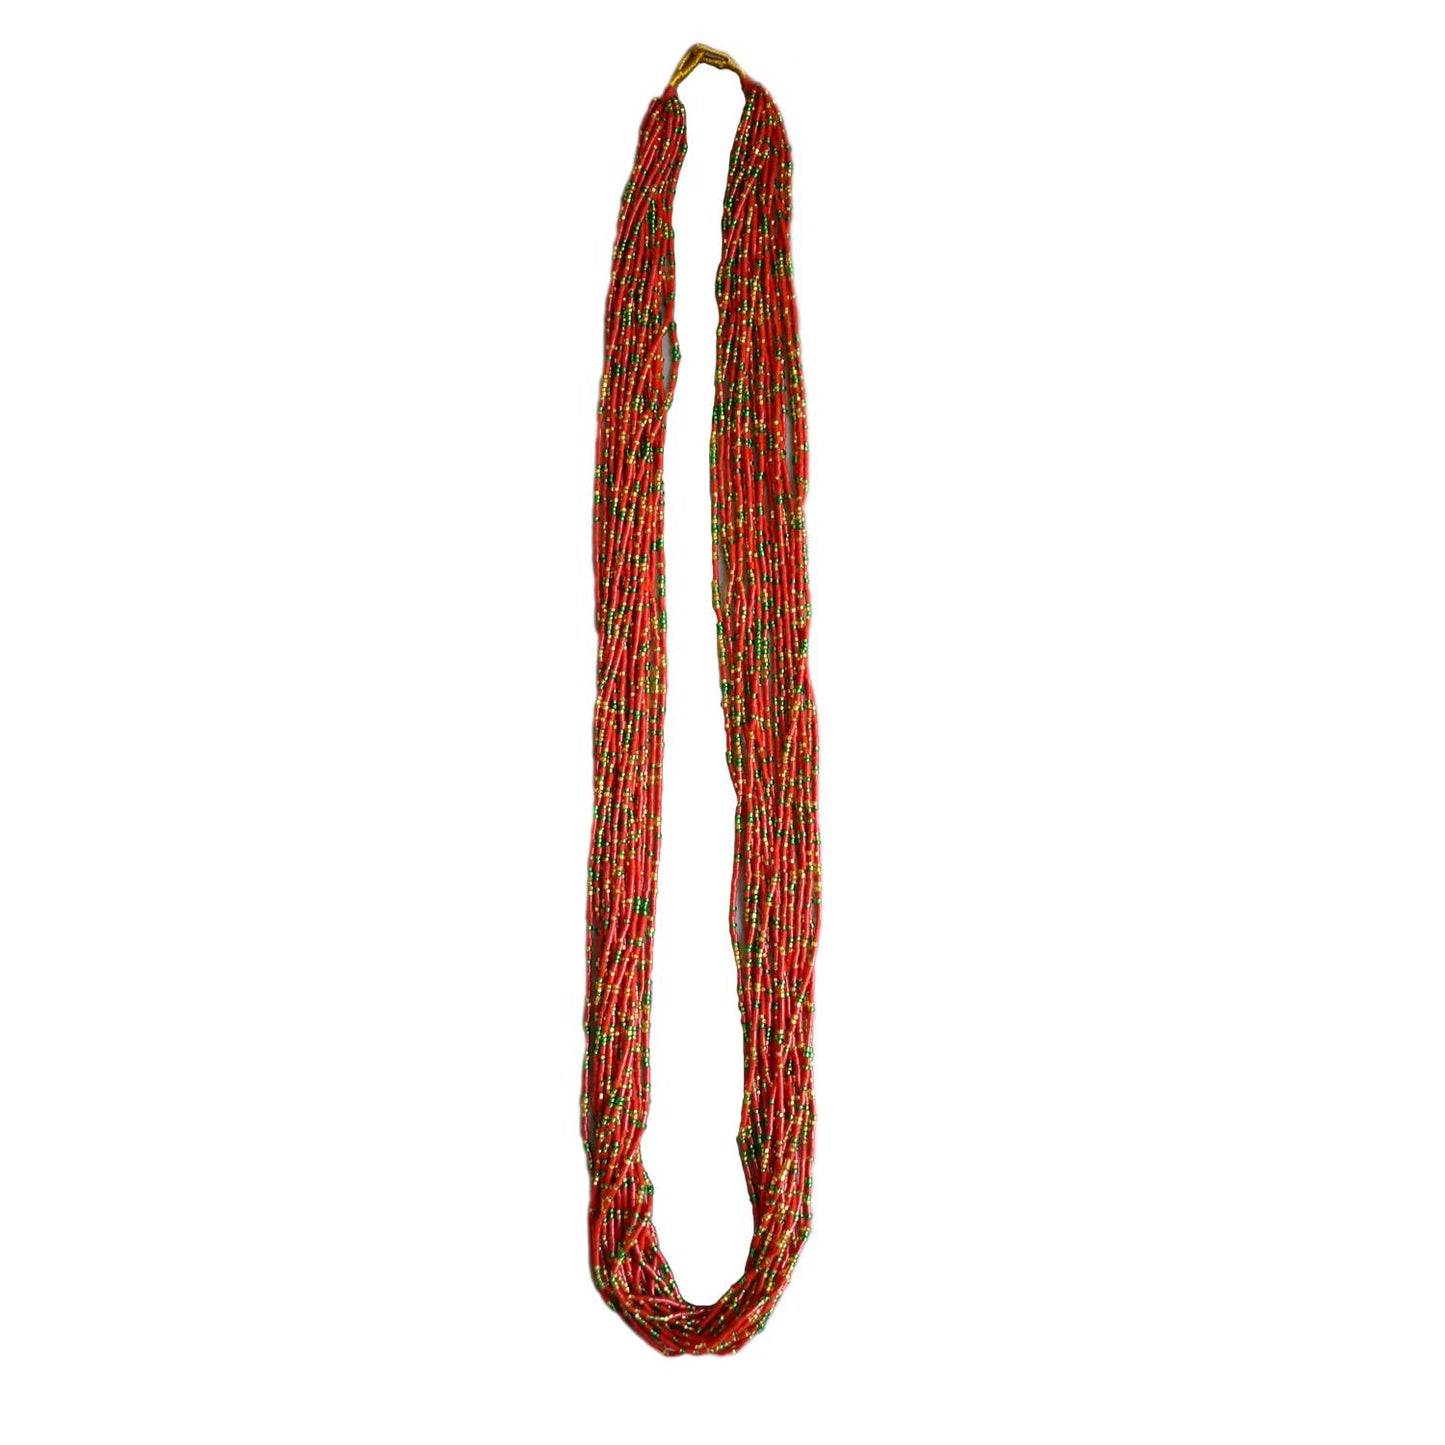 Red Speckled 18 strand Potay Necklace